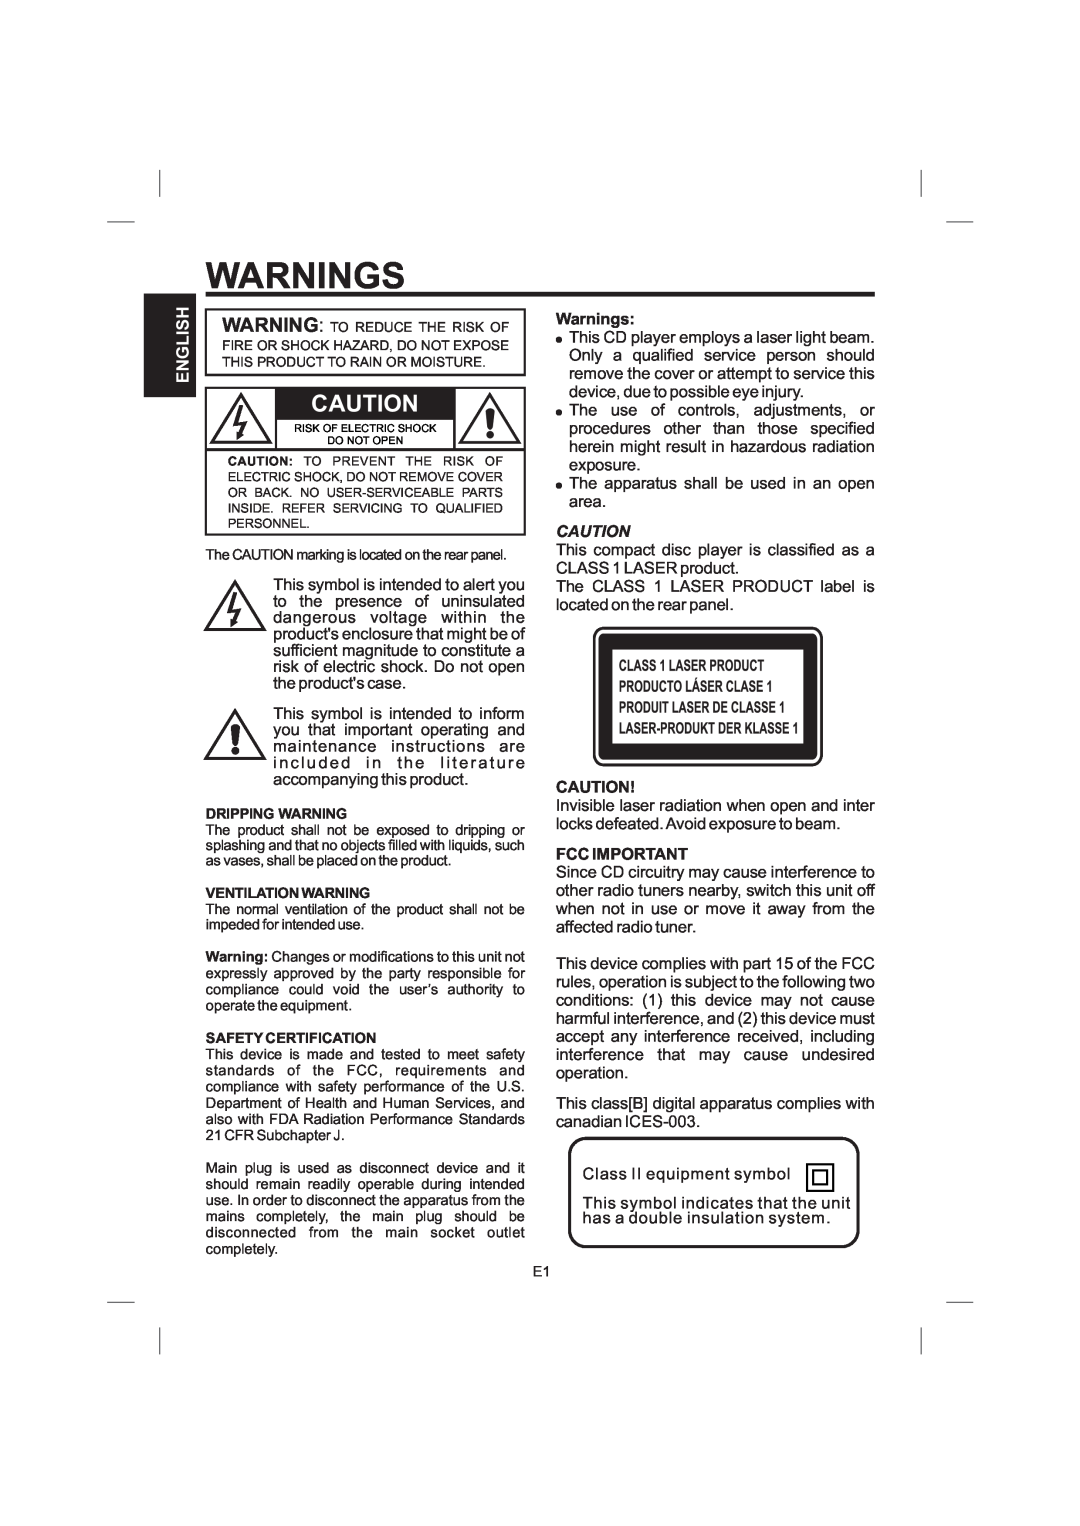 The Singing Machine STVG-359 manual Warnings, English, Fcc Important 